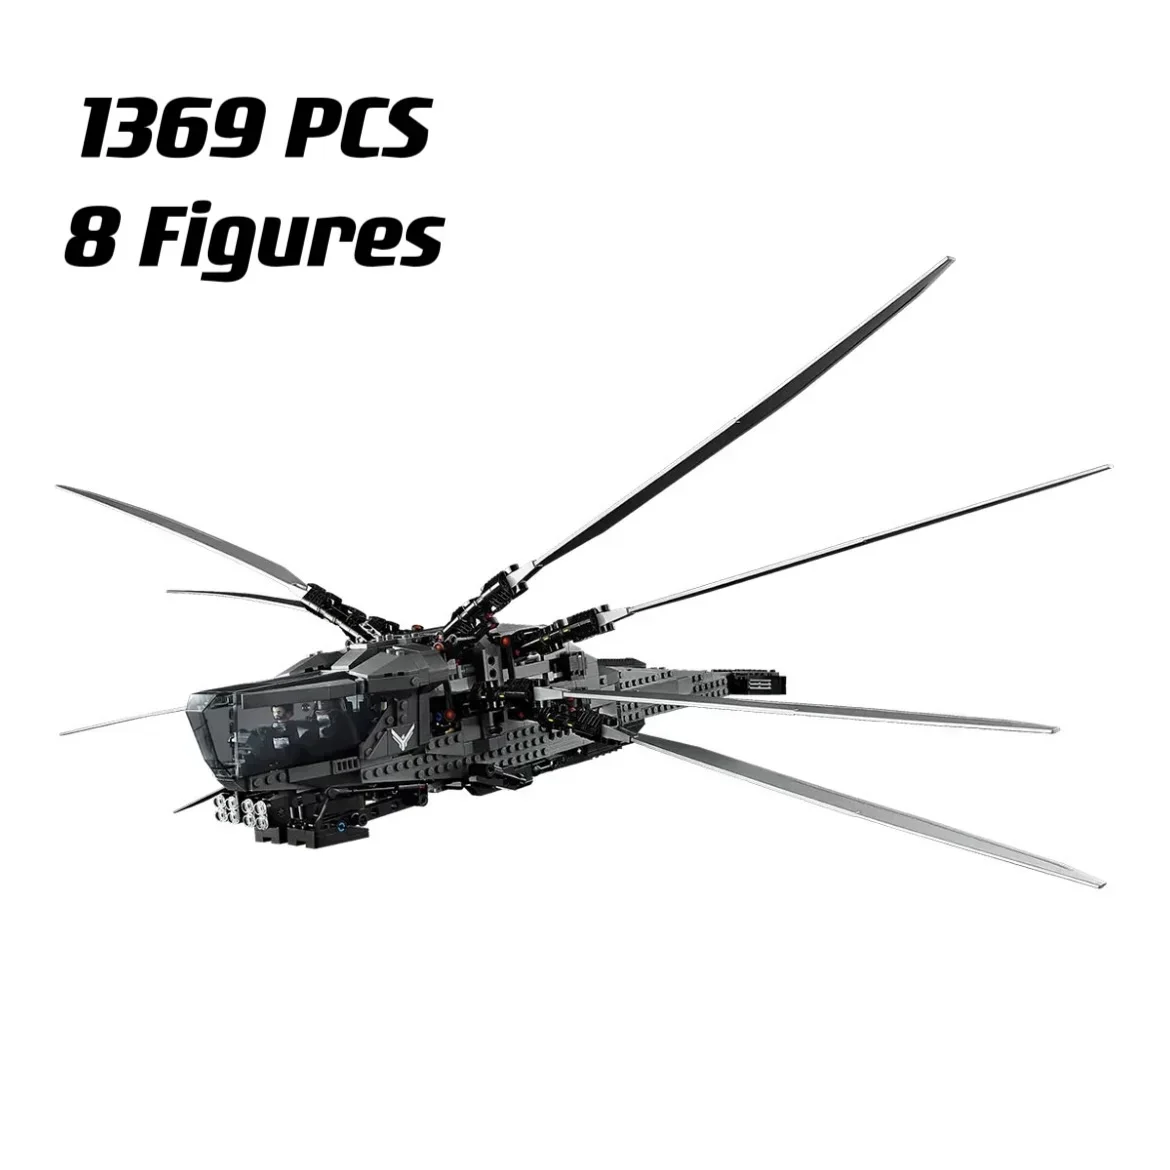 

1369Pcs Dune Atreides Royal Ornithopter Building Blocks Set Military Fighter Model Aircraft Bricks Toys For Kids Gifts 10327